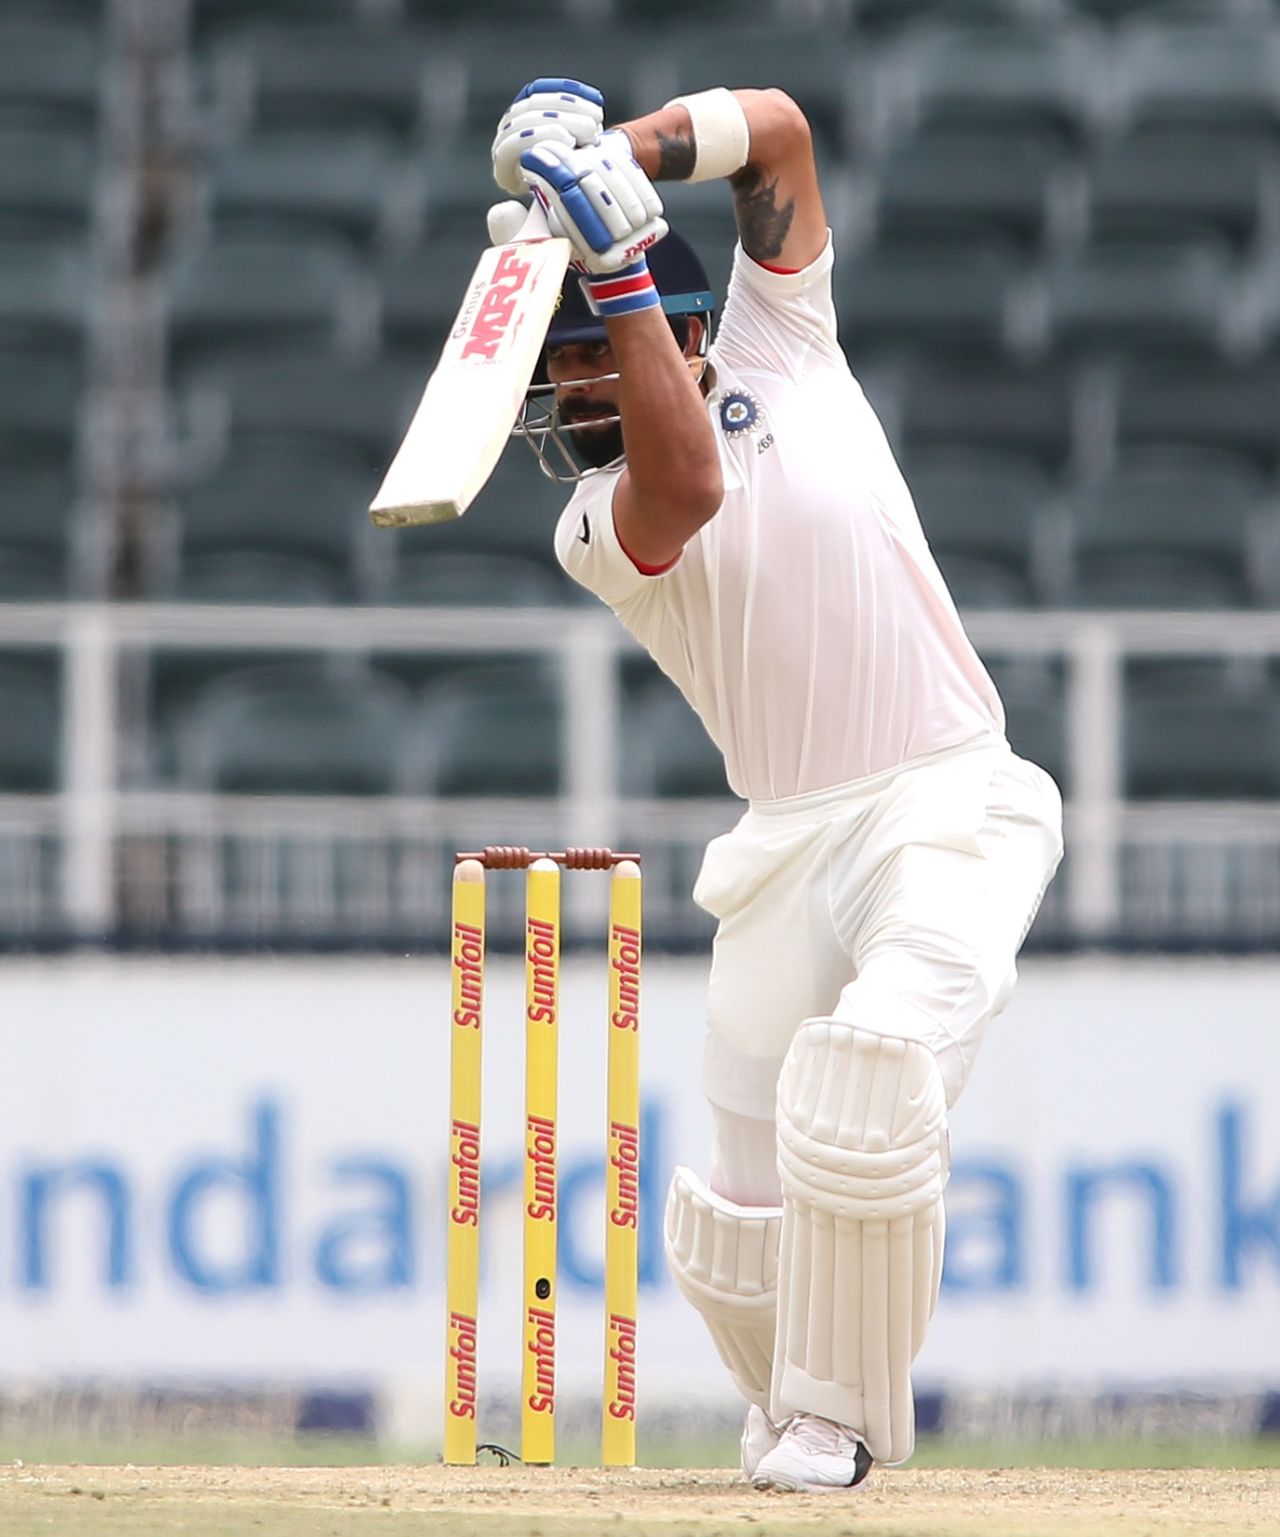 Virat Kohli nails the cover drive, South Africa v India, 3rd Test, Johannesburg, 1st day, January 24, 2018